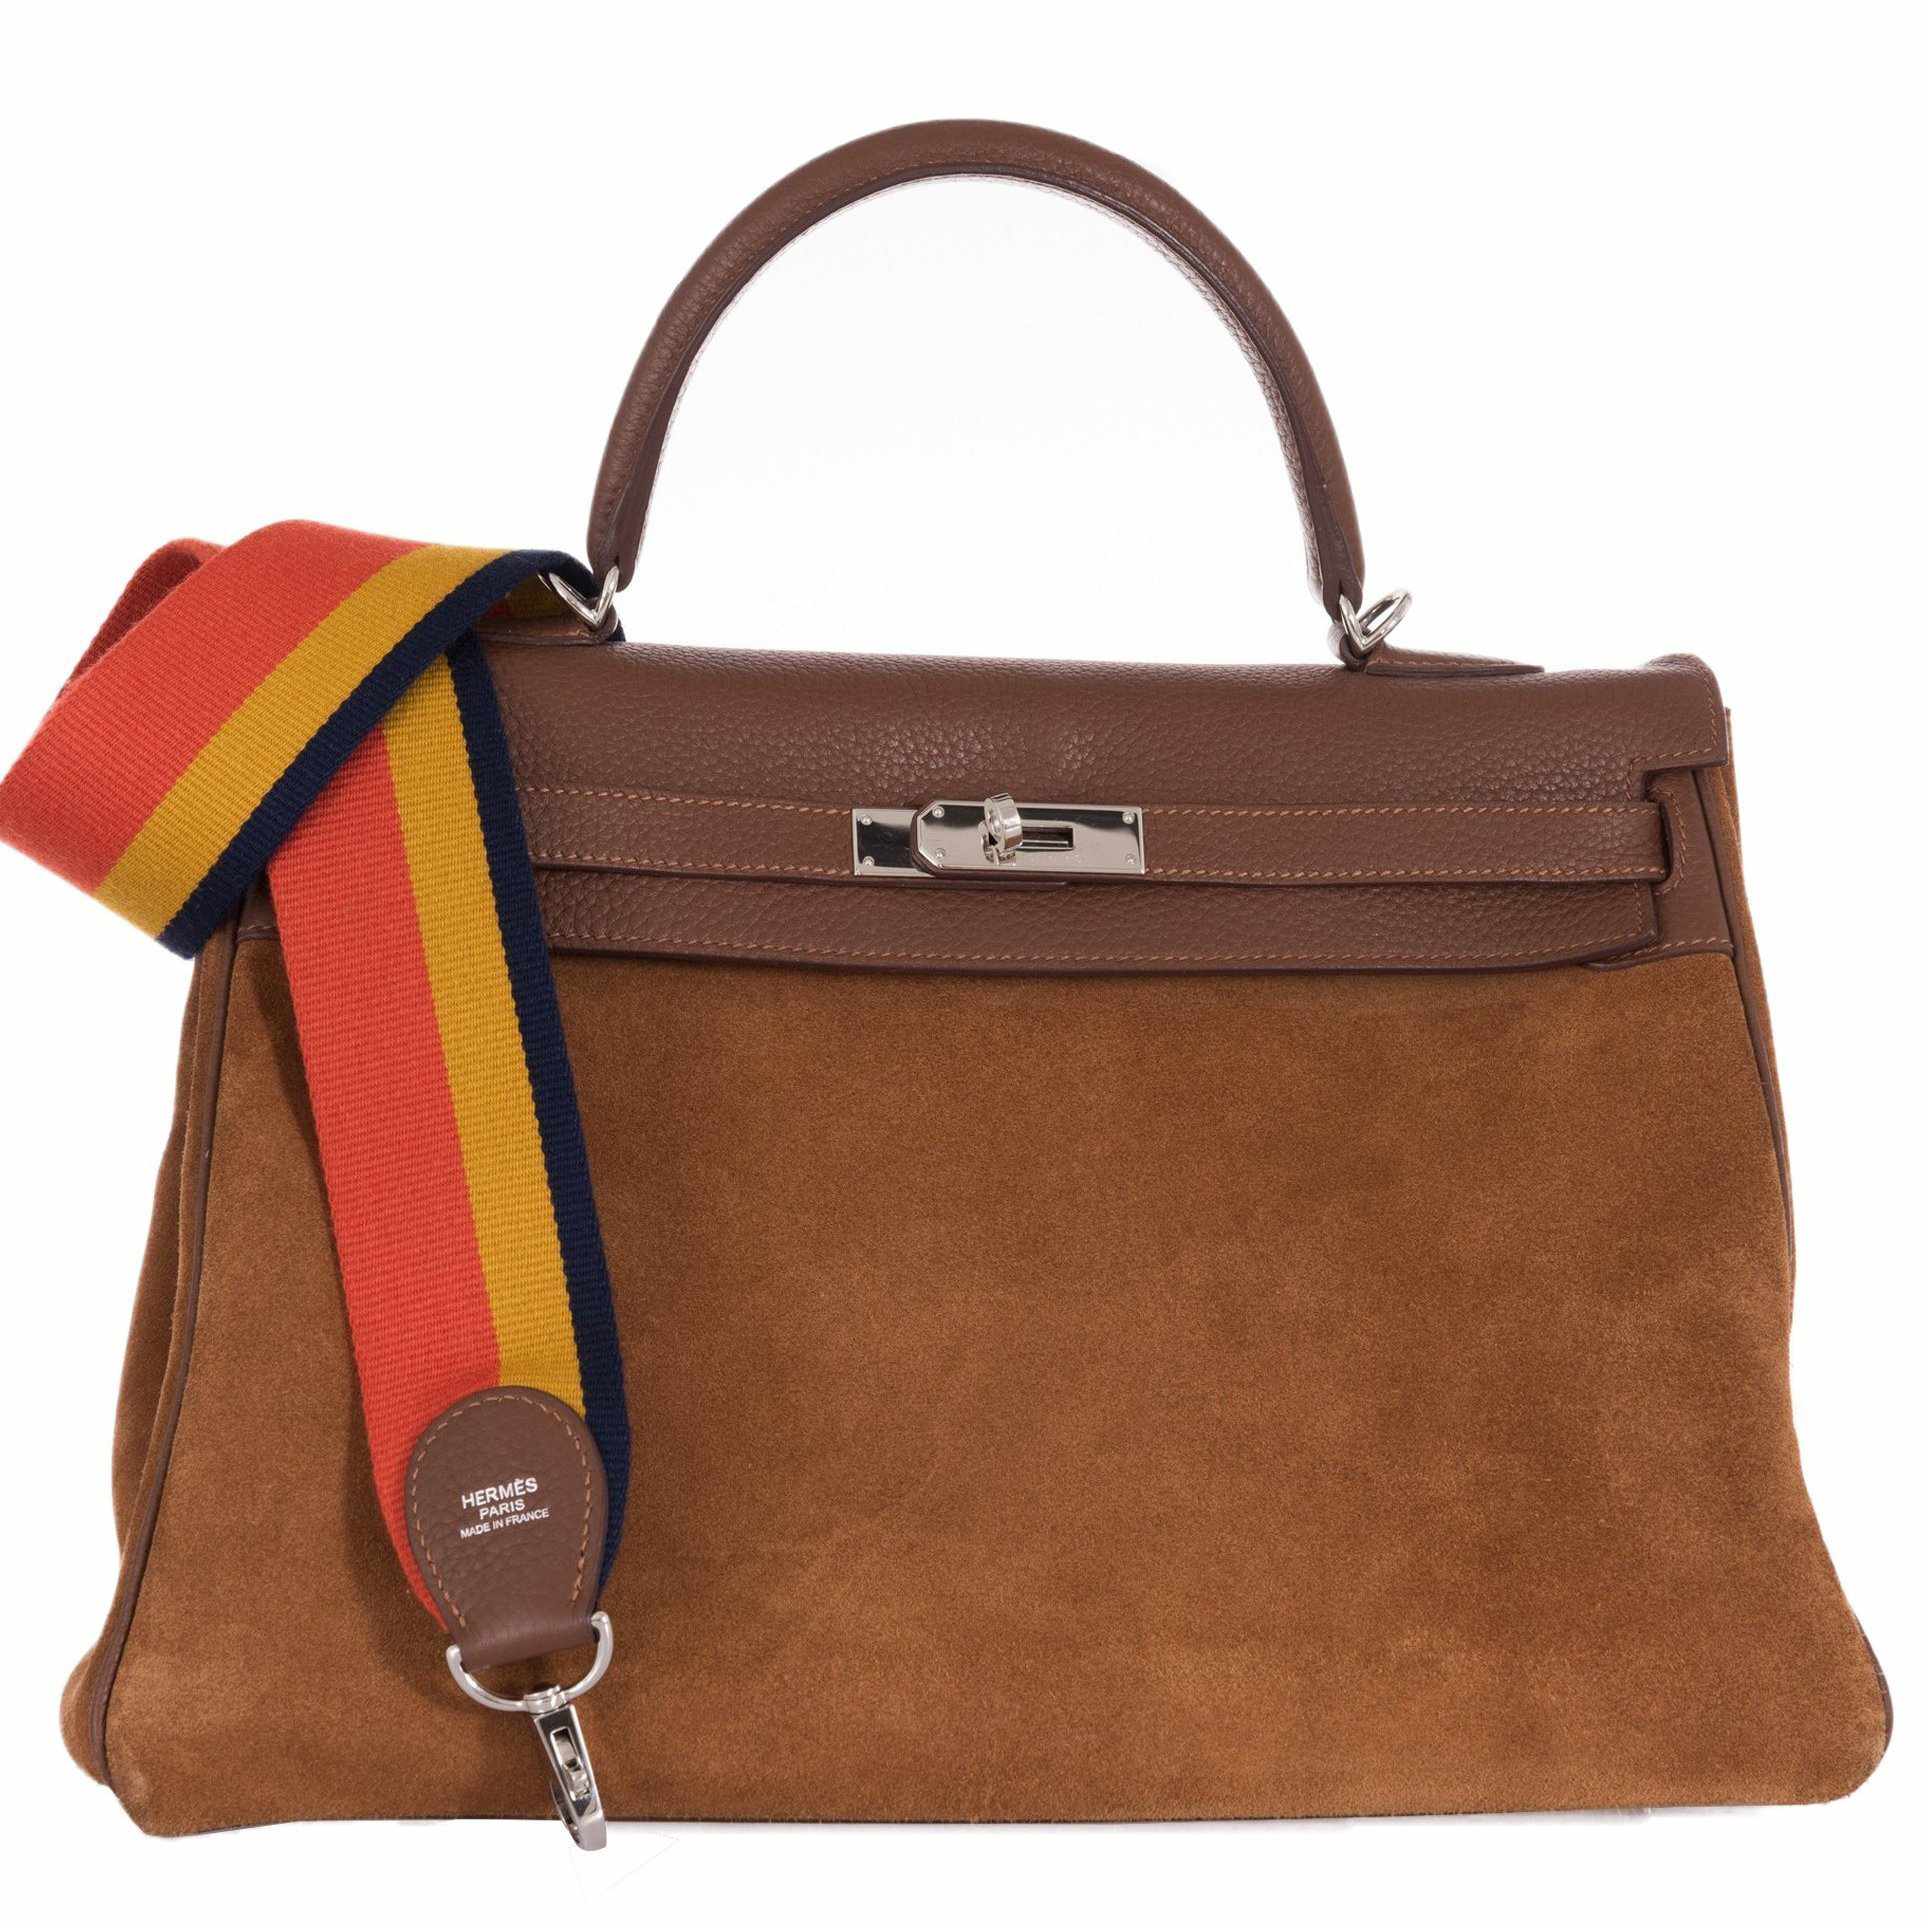 Hermès Kelly 35 Fauve Grizzly Bag Rainbow Amazone Strap - Limited Edition